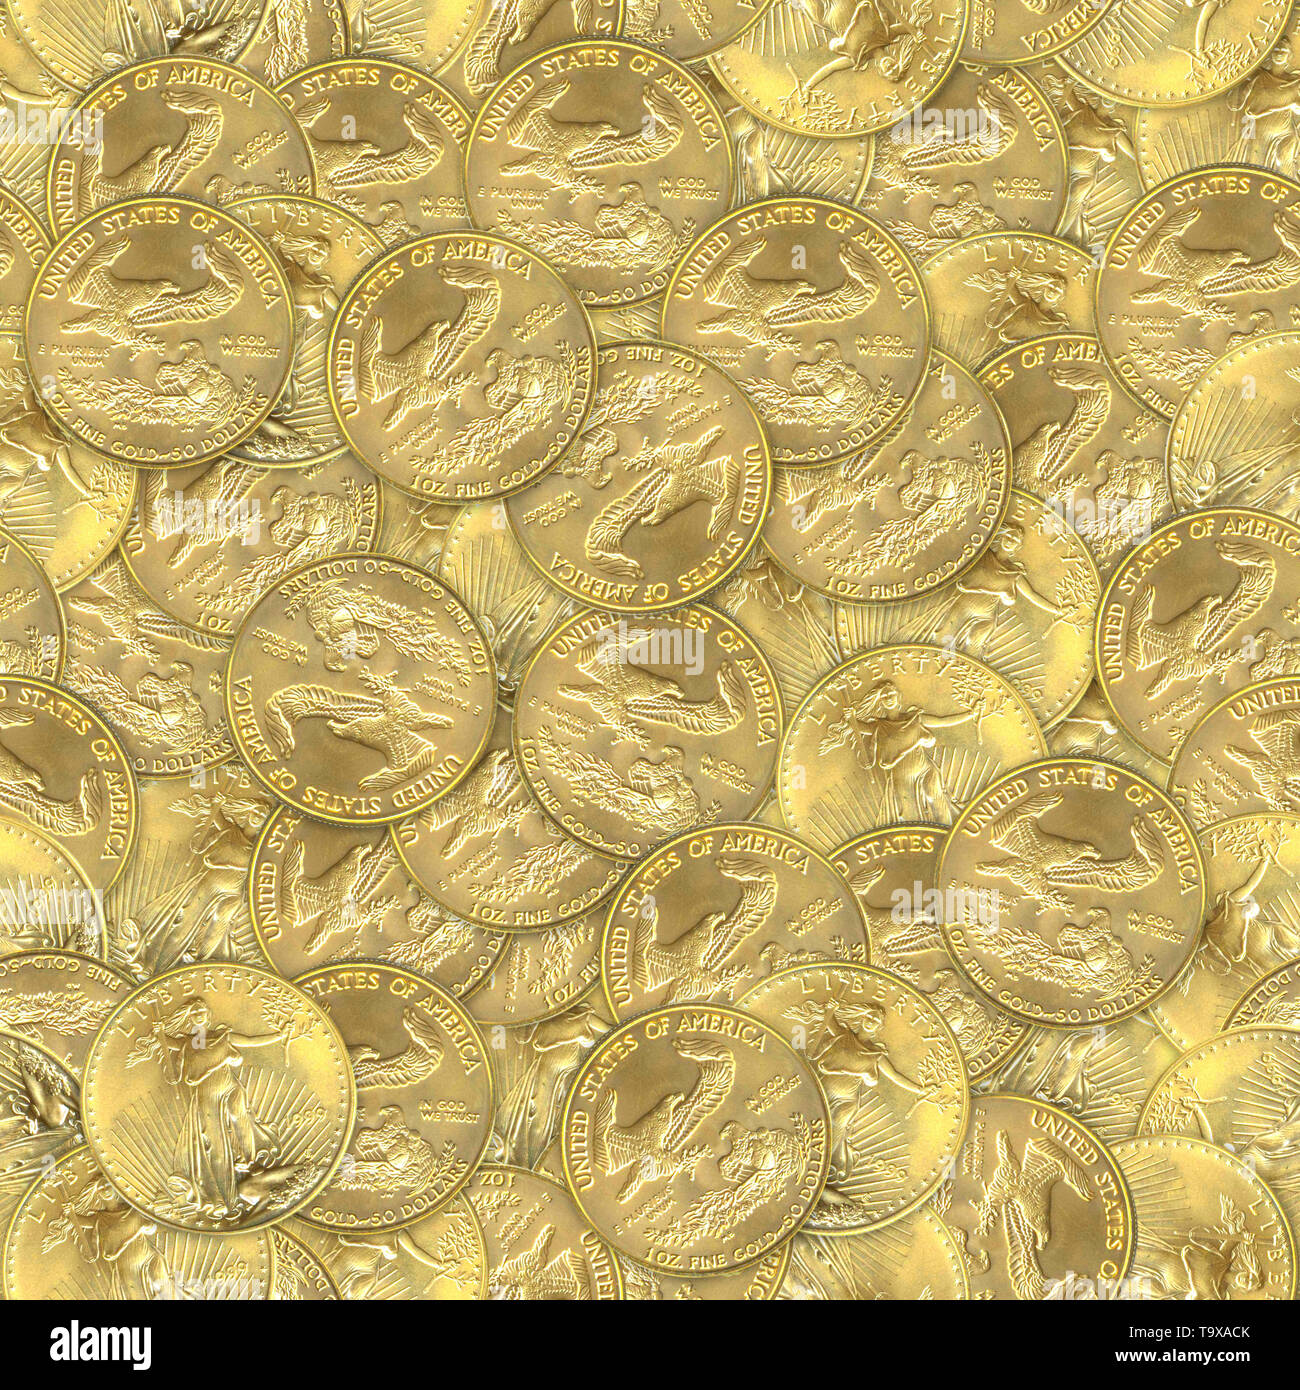 US Gold Eagle Coins Seamless Texture Tile Stock Photo